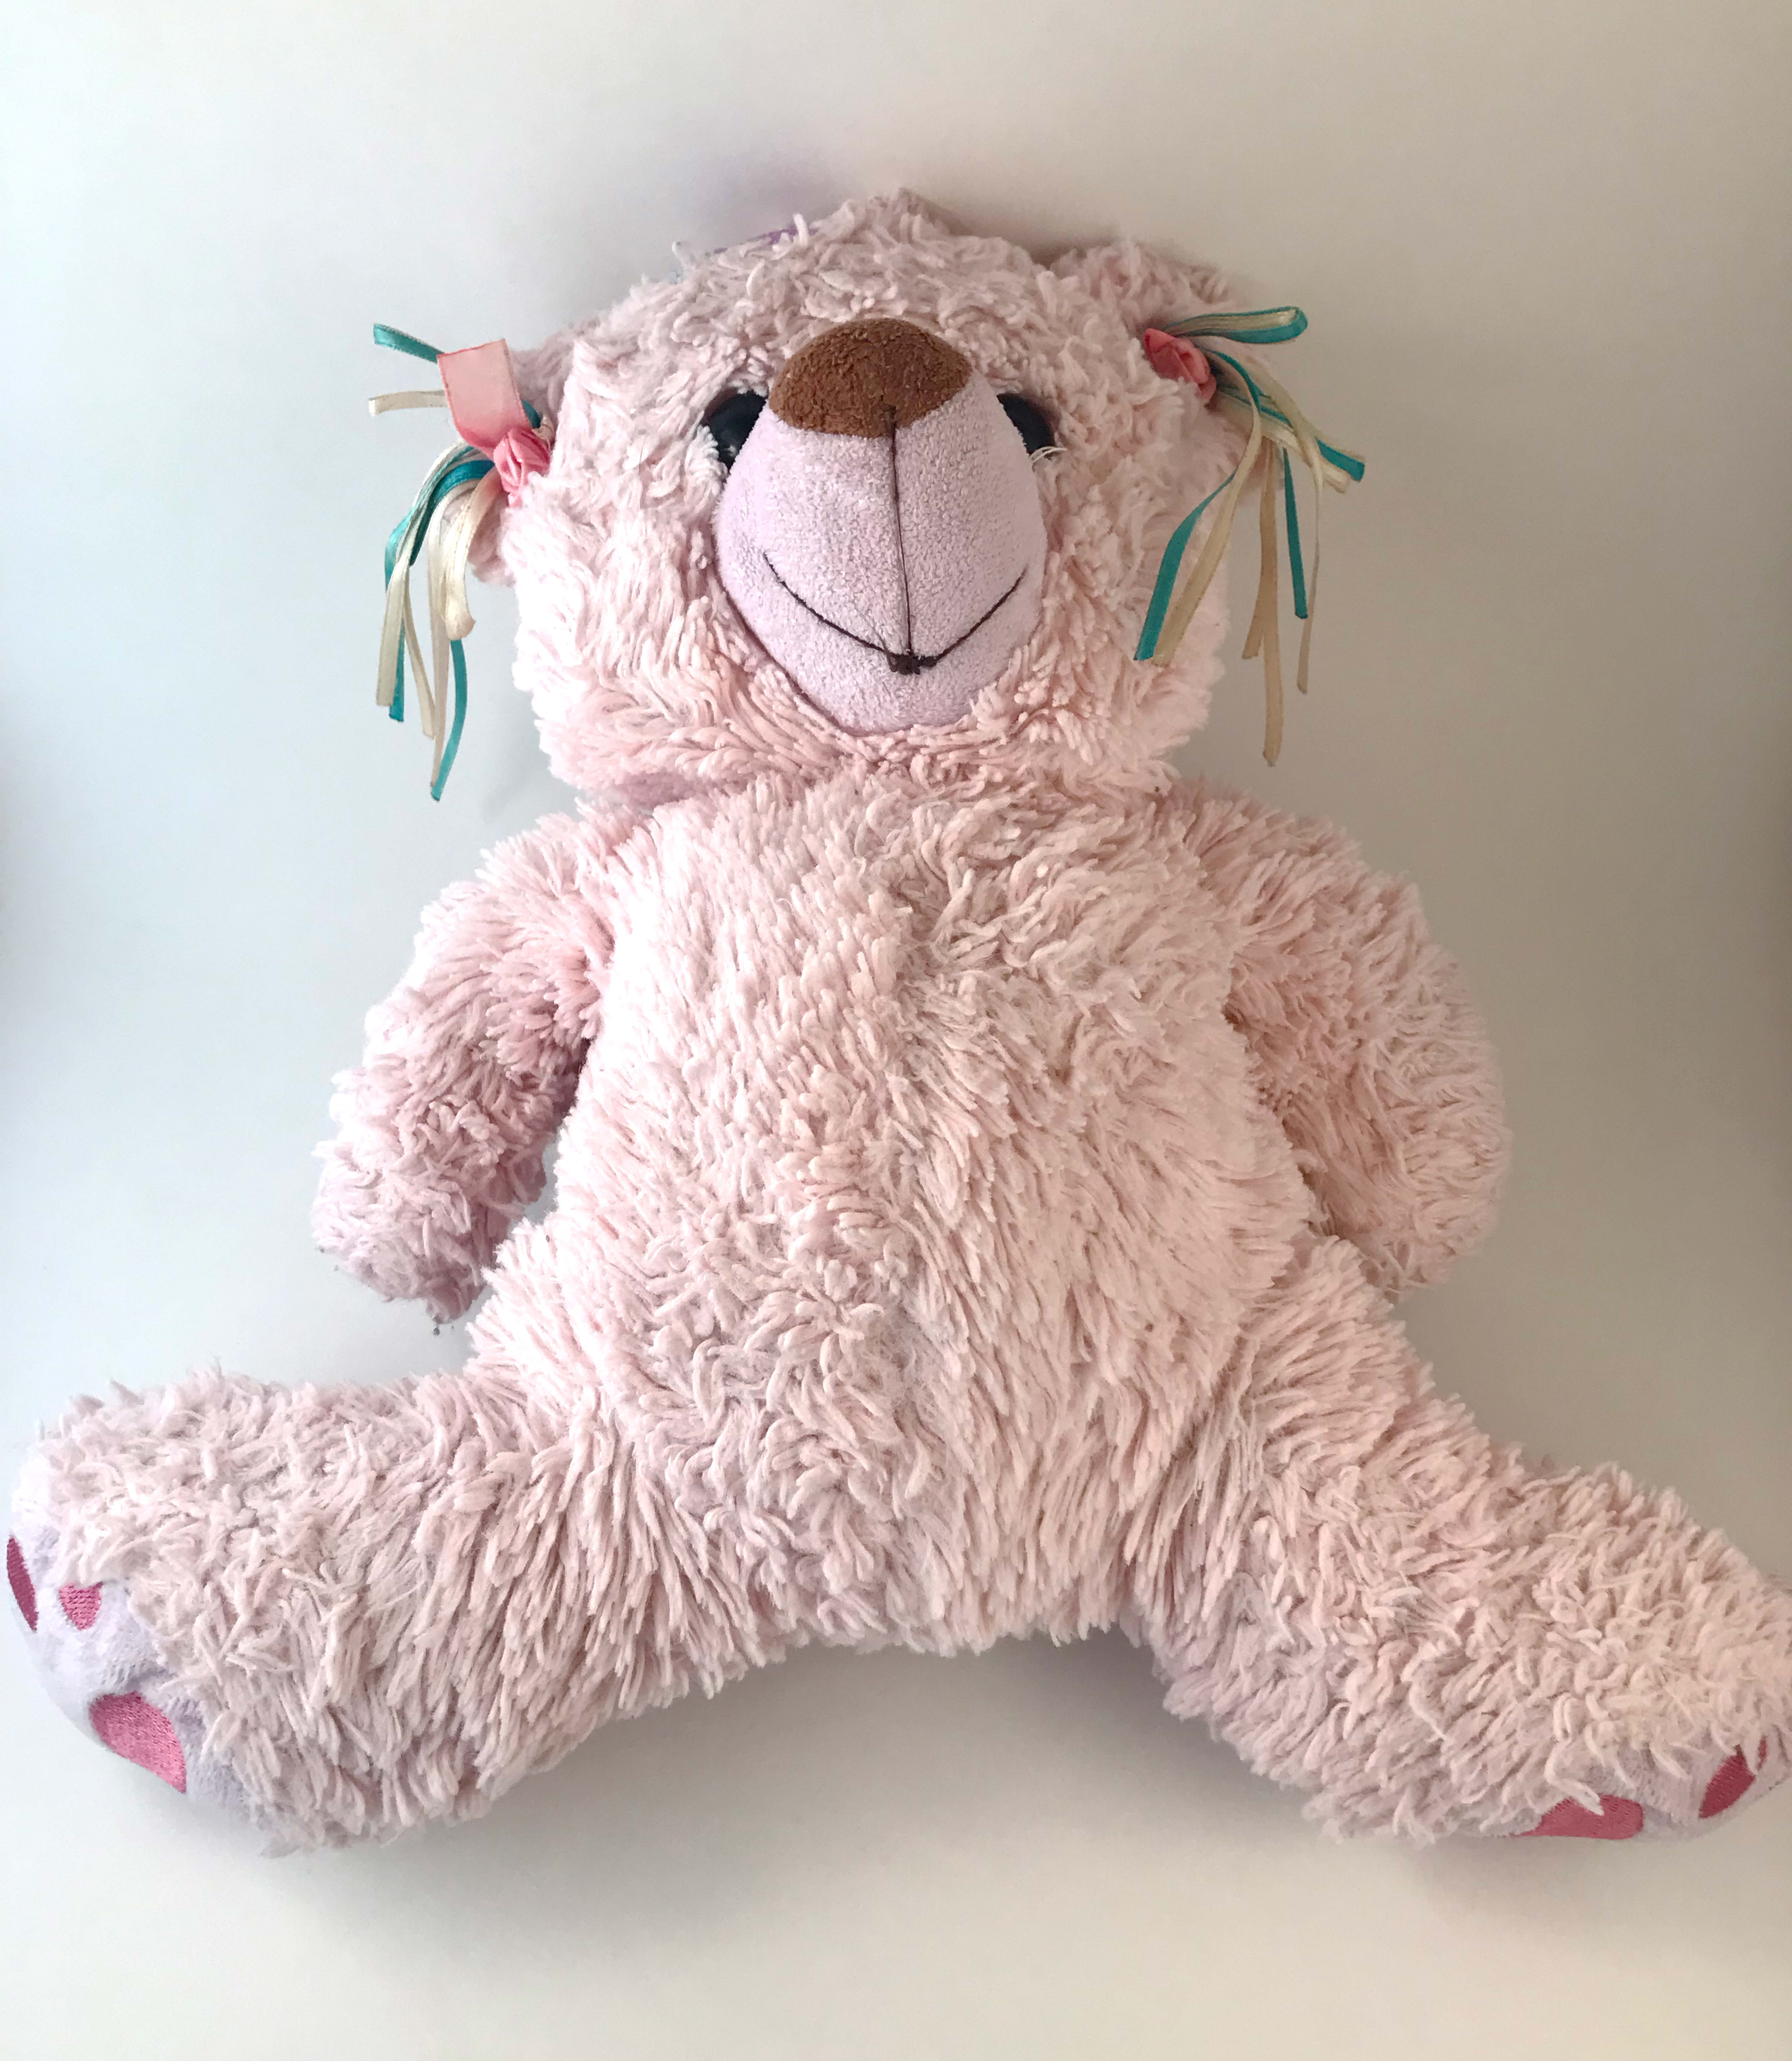 A pink teddy bear